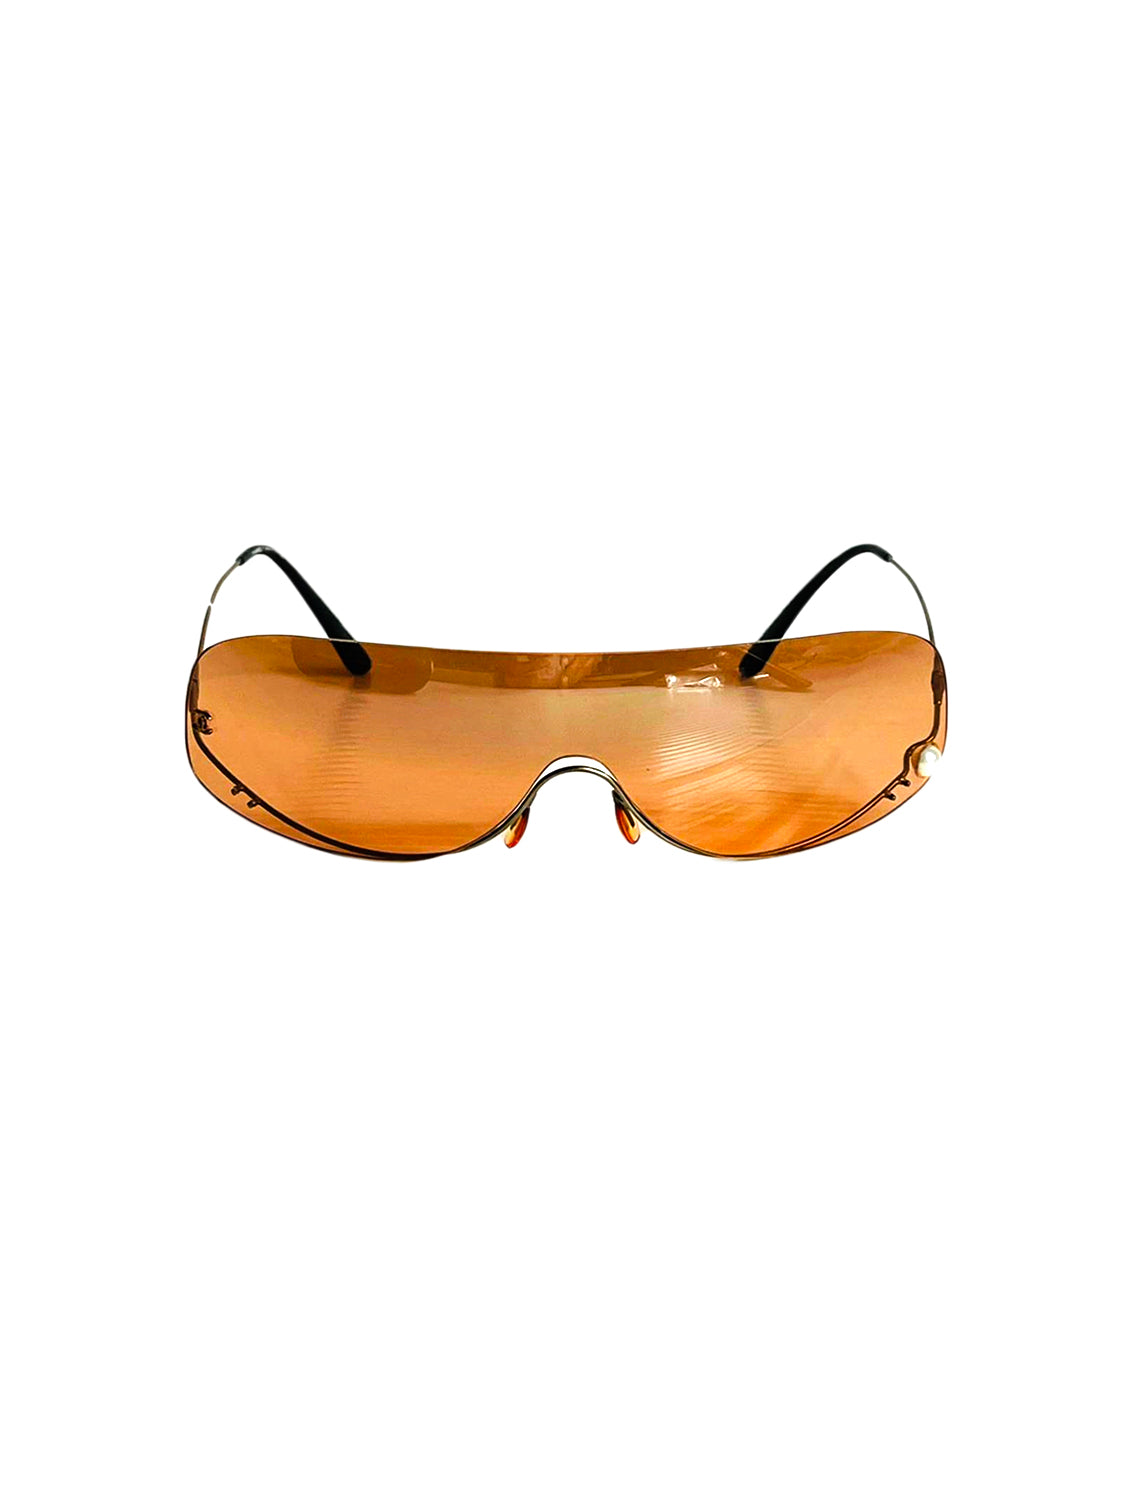 Chanel Sport Orange Visor Sunglasses  INTO